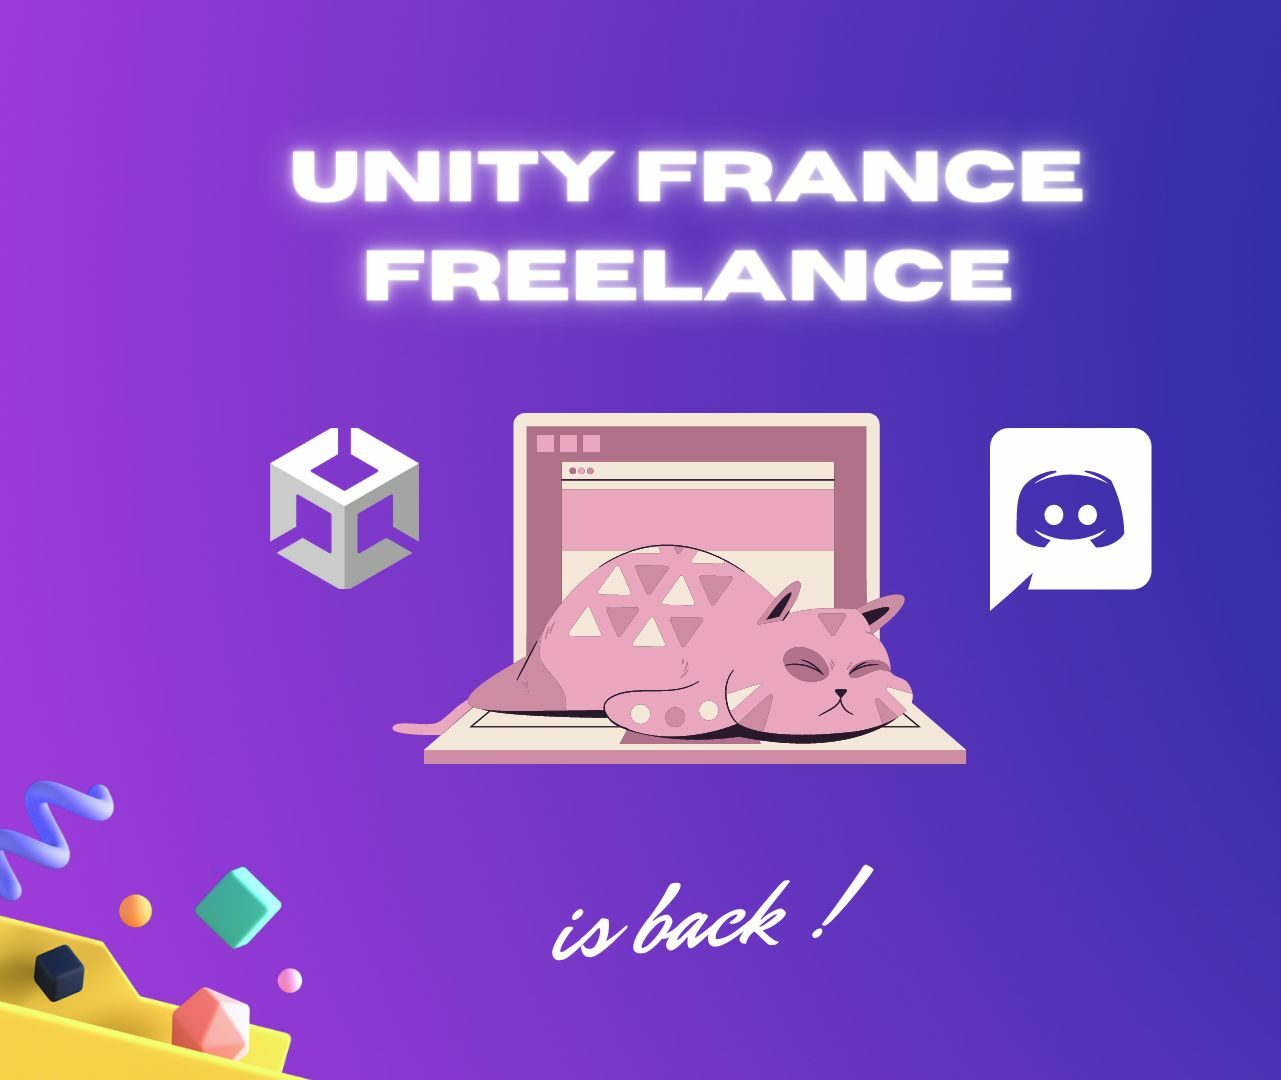 Discord Unity France Freelance